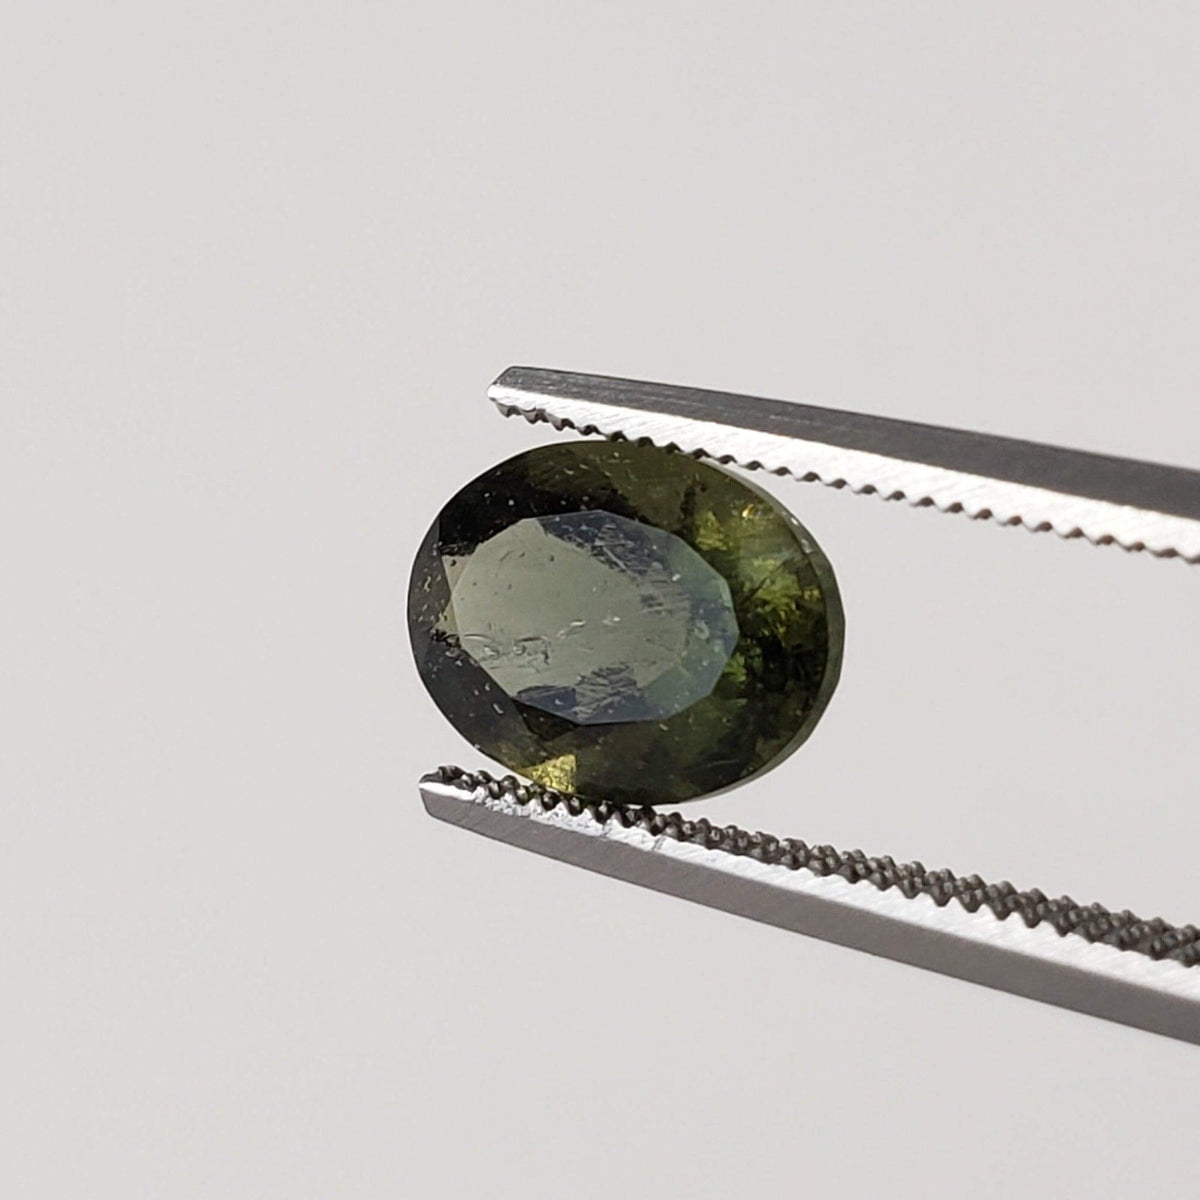 Authentic Moldavite | Oval Cut | 8x6mm | Chlum Region, Czech Republic